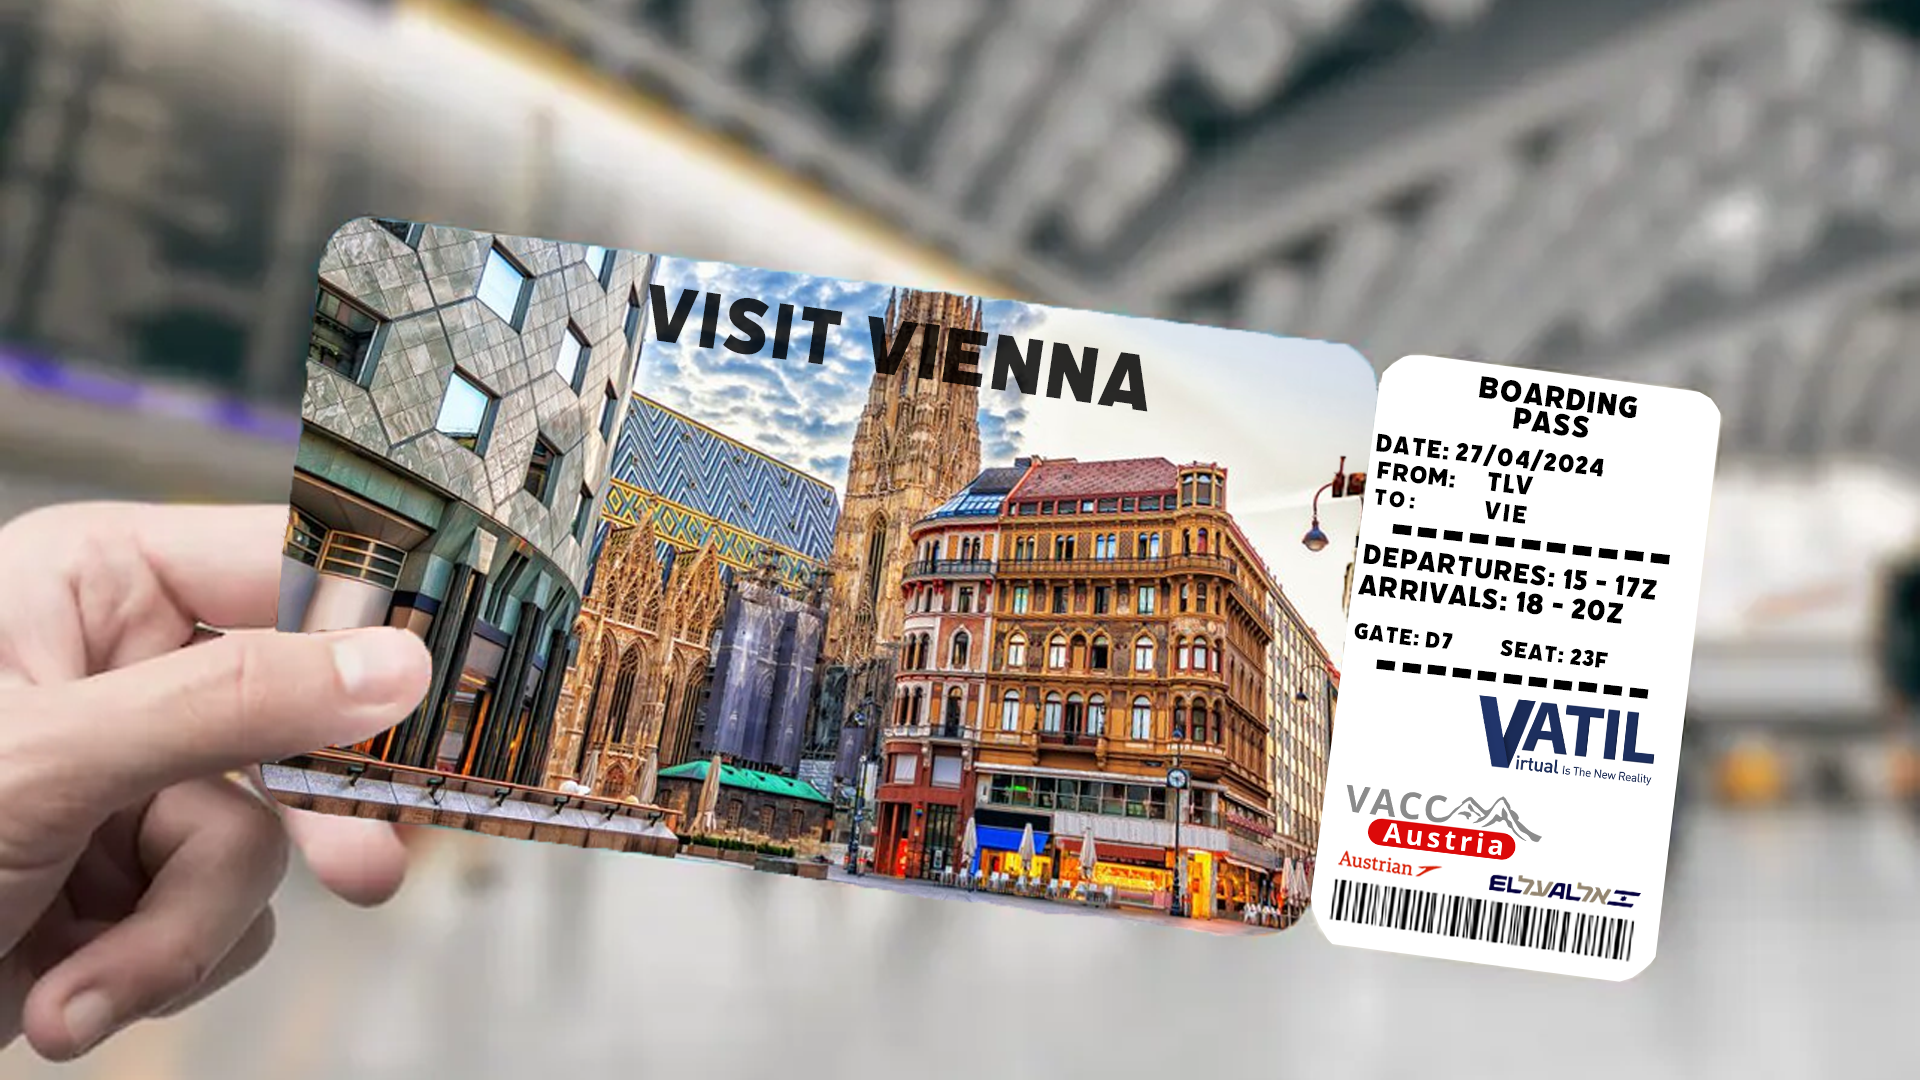 Tel Aviv - Vienna Shuttle - Virtual Norwegian Events